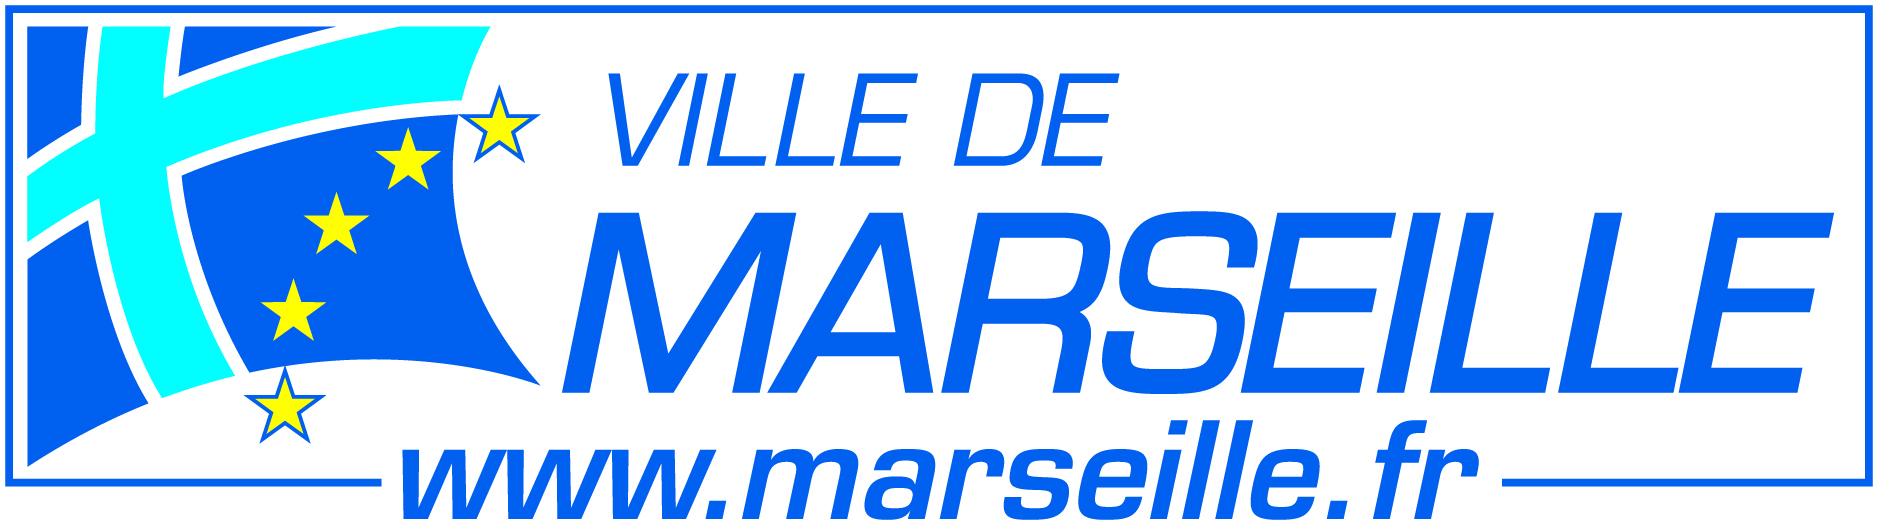 logo-ville-de-marseille